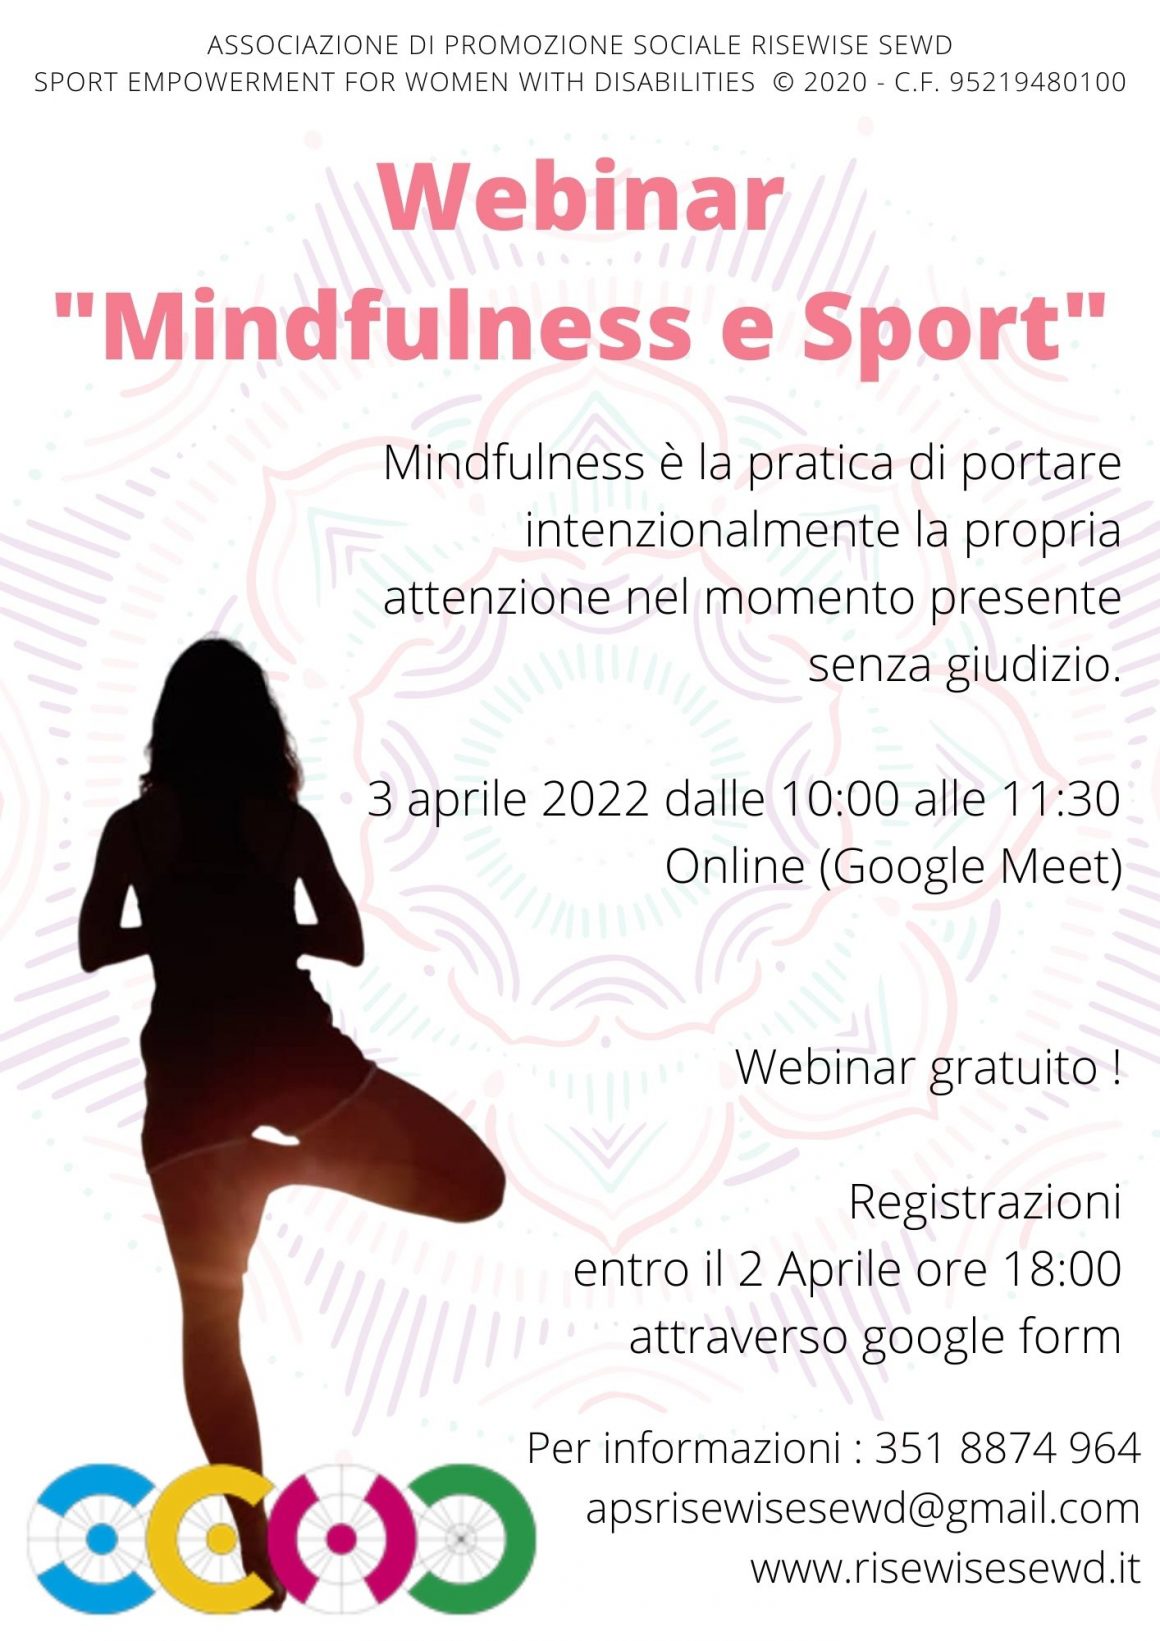 Webinar “Mindfulness e Sport”